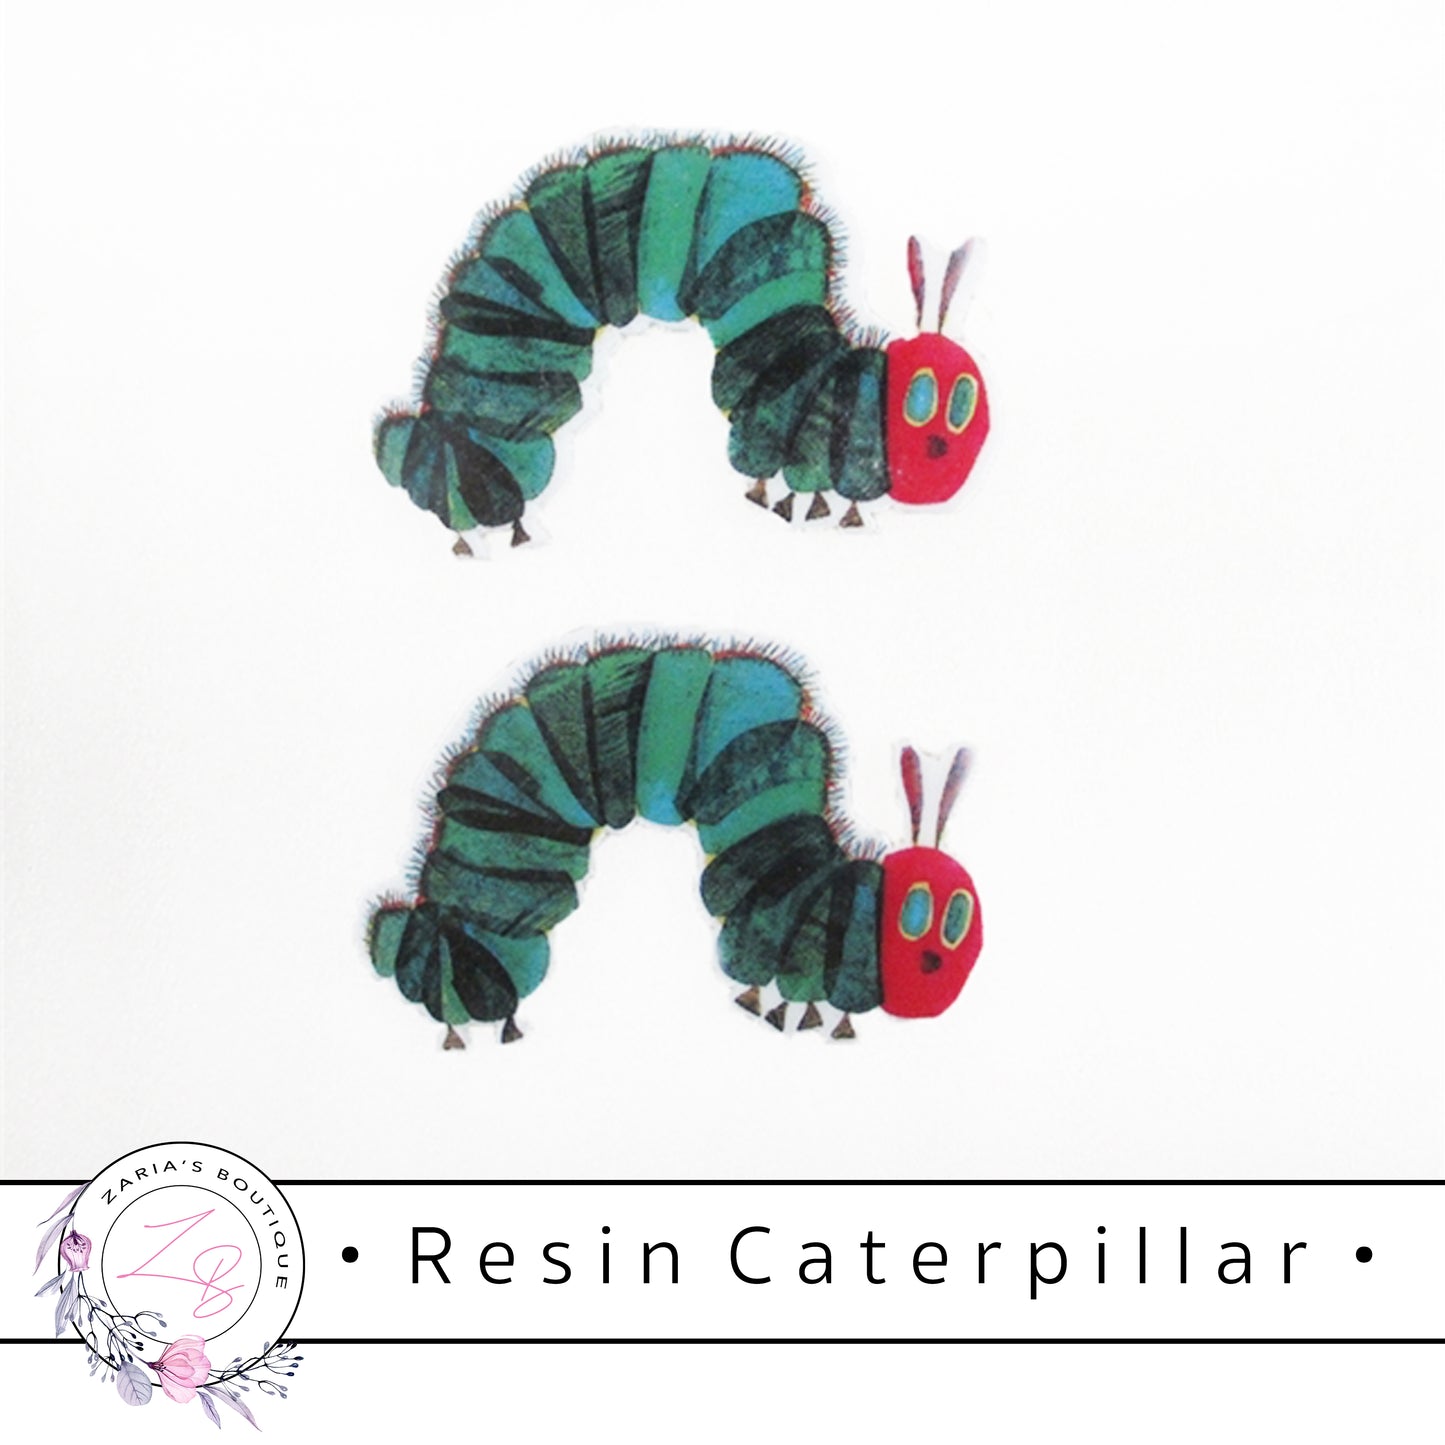 ⋅ Caterpillar ⋅  Flatback Planar Resins x 2